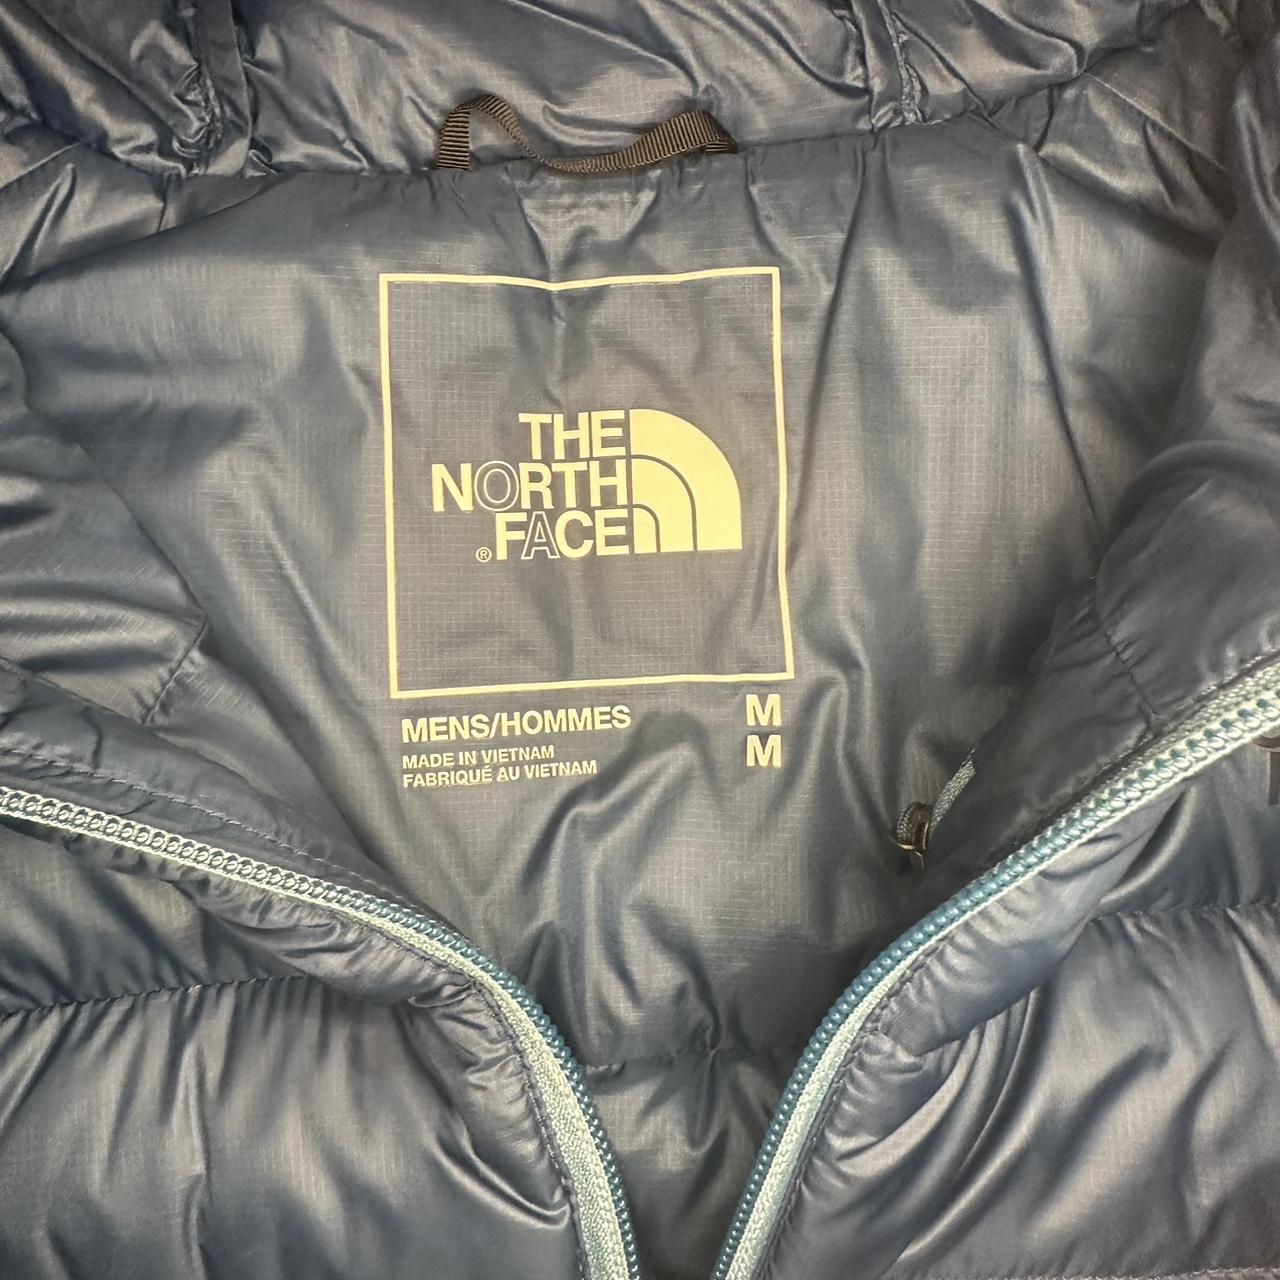 The North Face Men’s Puffer Jacket Message me... - Depop